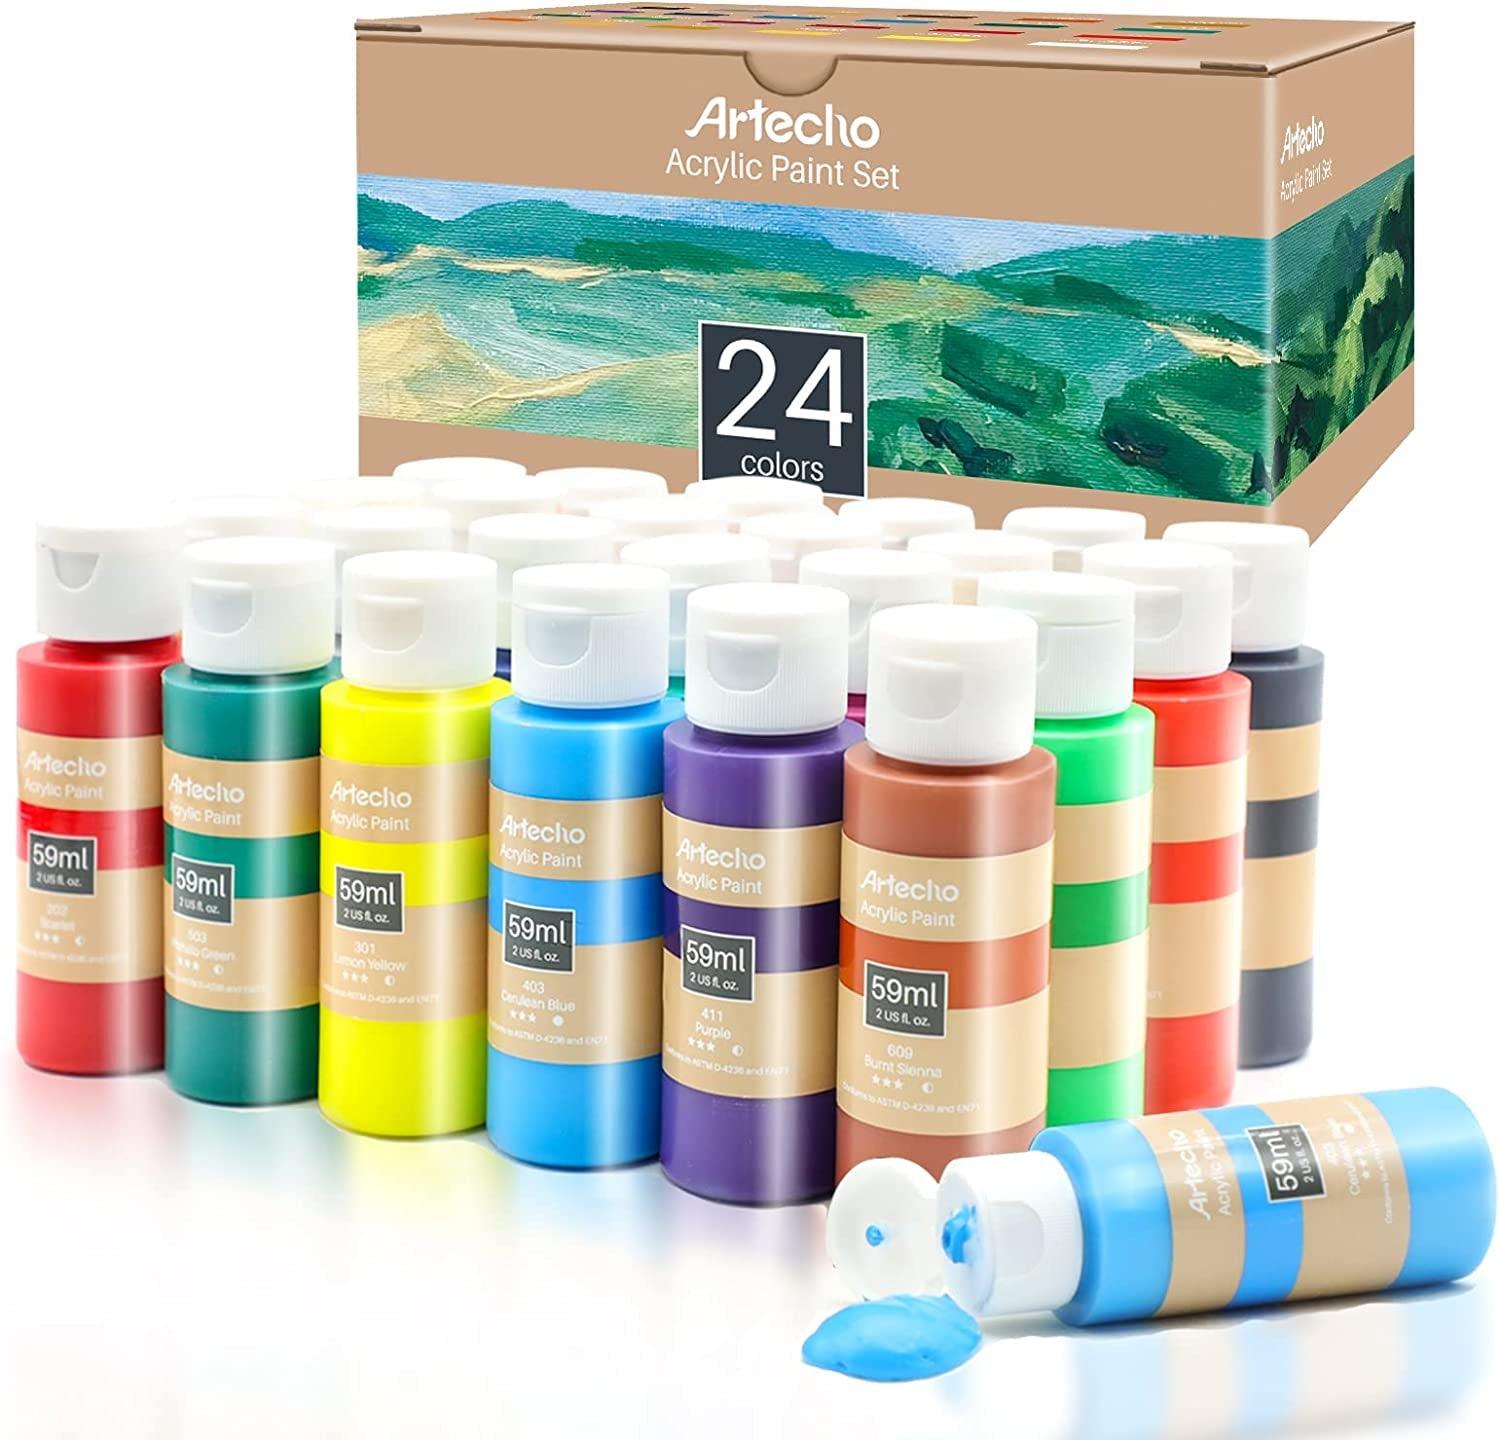 Artecho Acrylic Paint Acrylic Paint Set for Art, 24 Color 2 Oz Basic Acrylic  Paint Supplies for Wood, Fabric, Crafts, Canvas